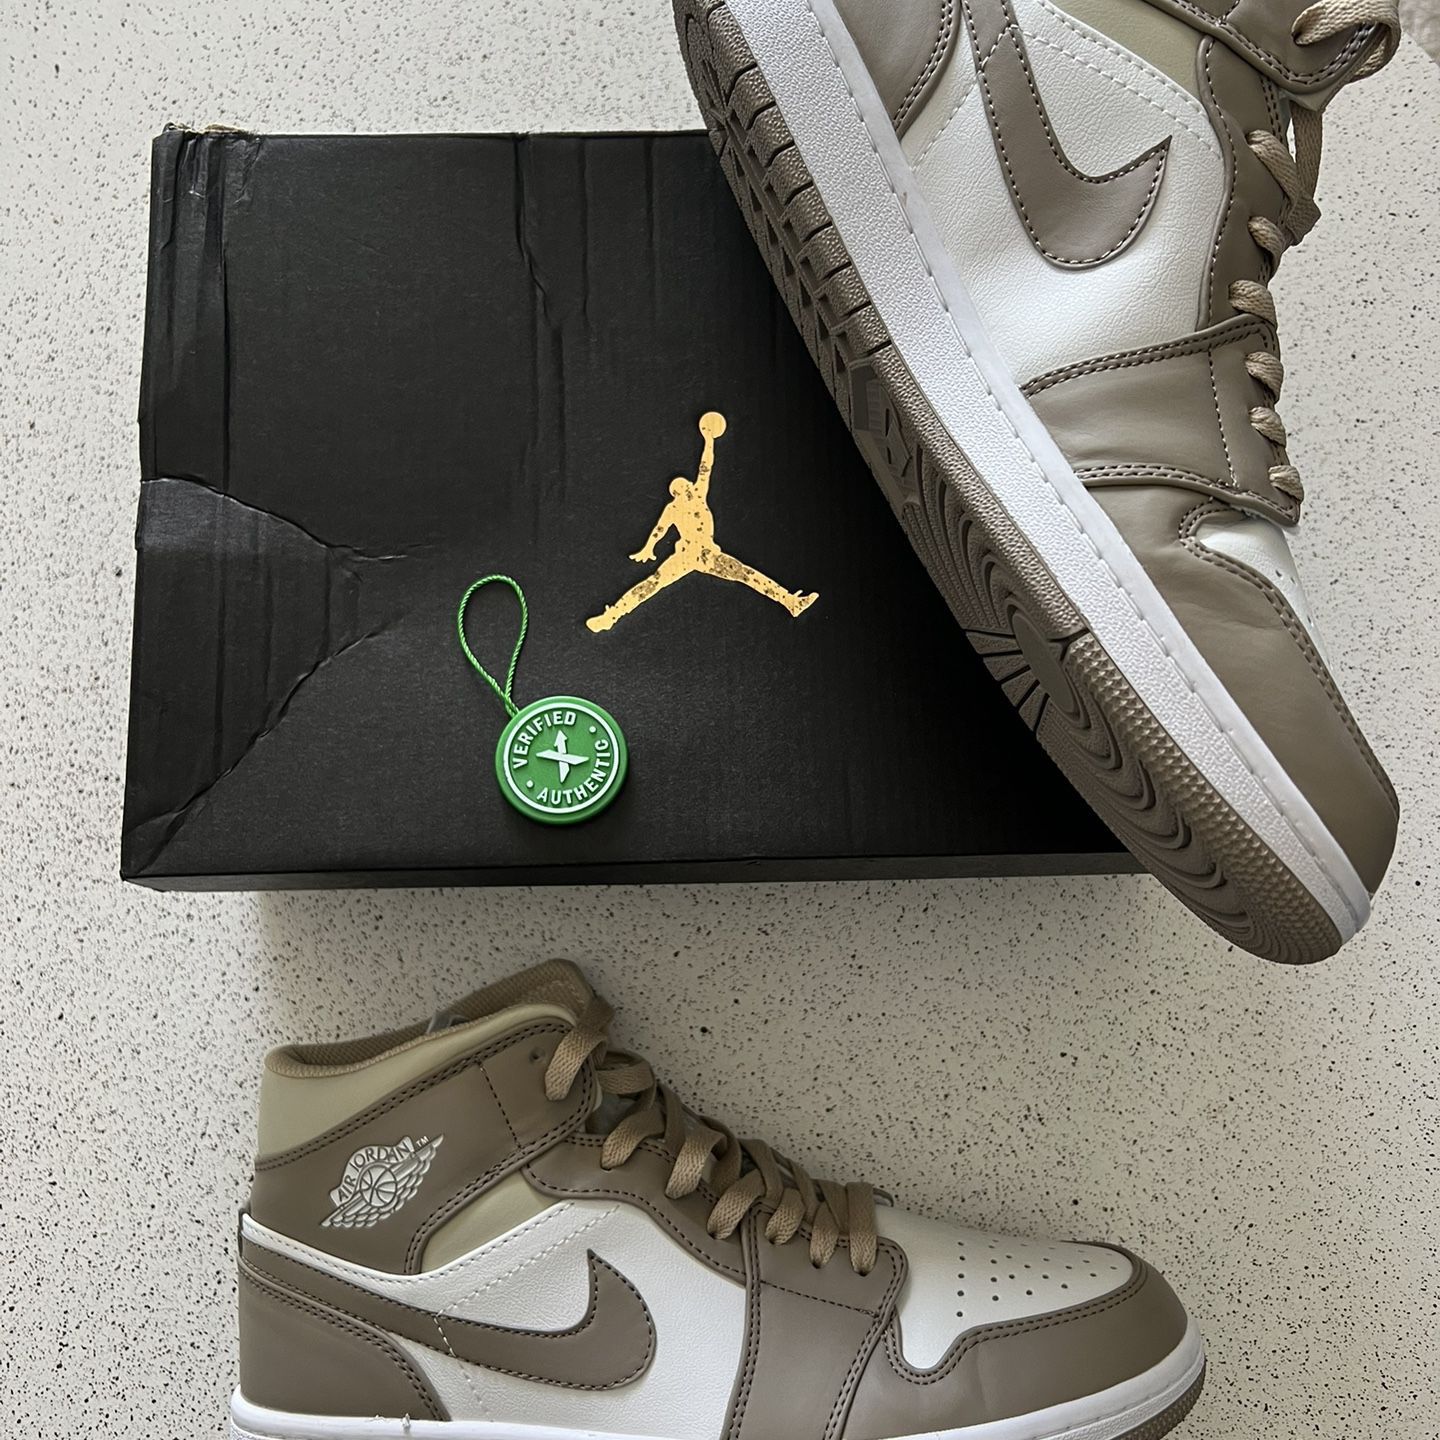 Nike Air Jordan 1 / Size 10.5 College Grey/White